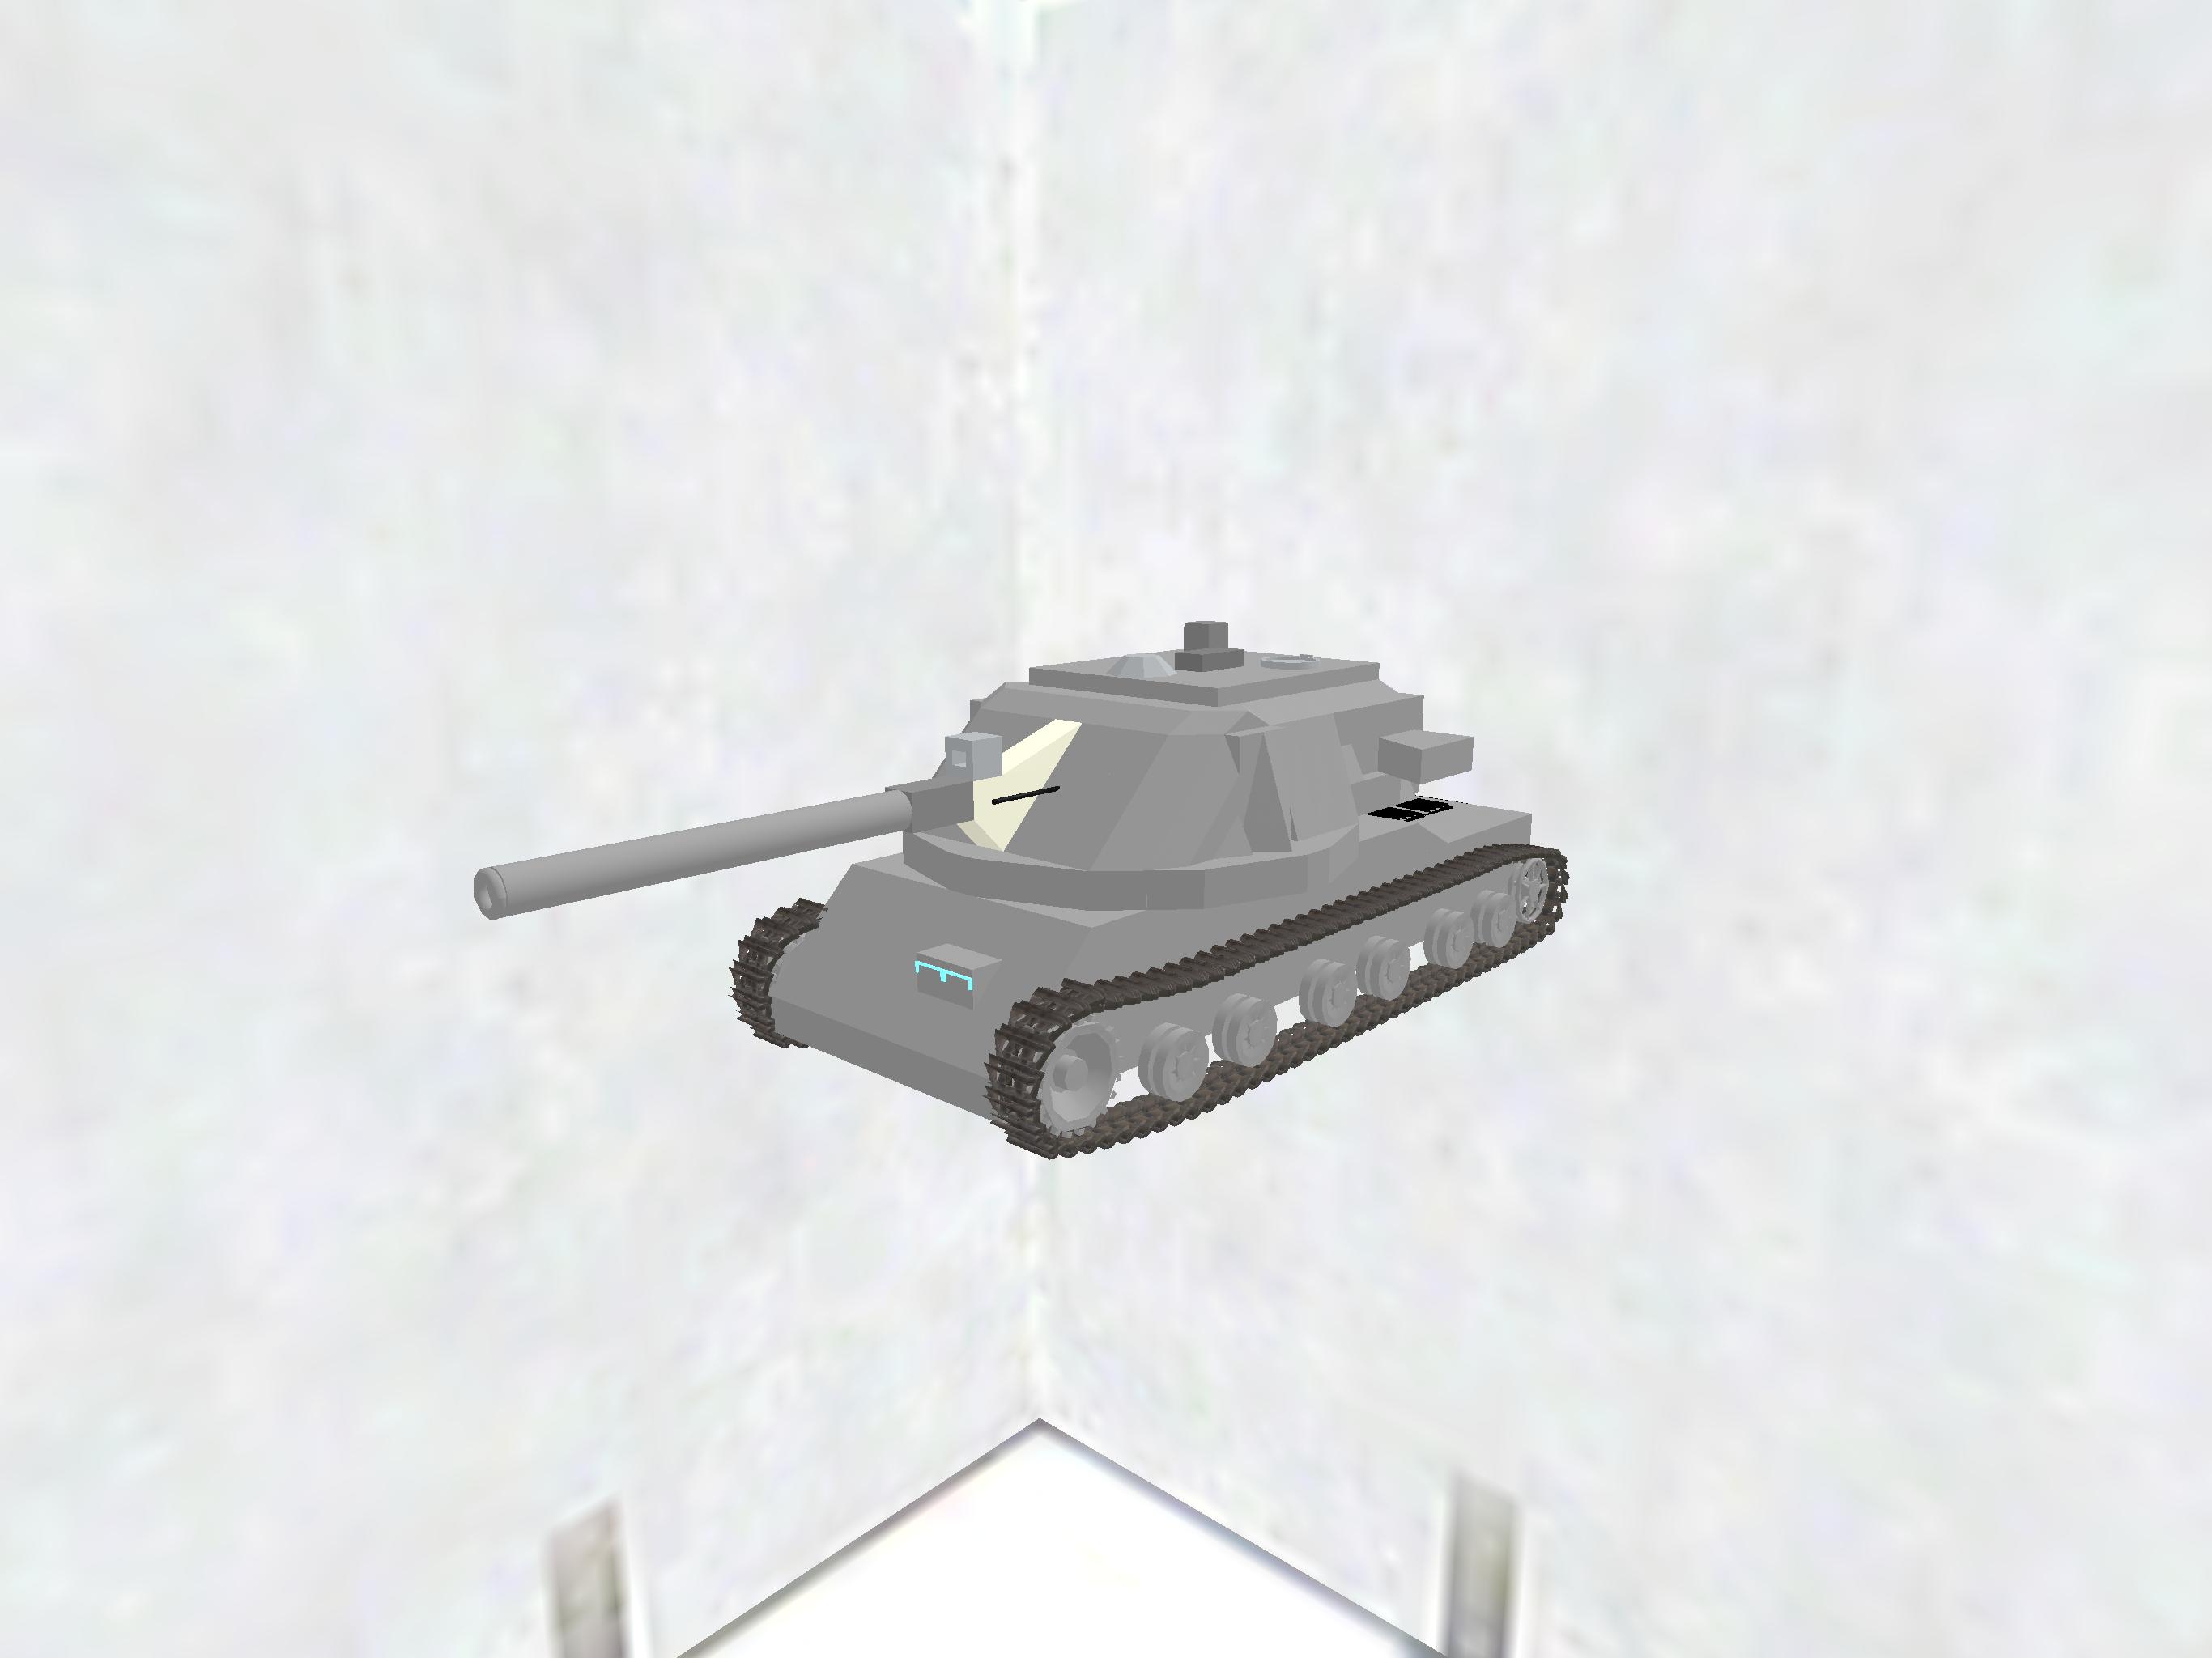 Causlak(medium tank)